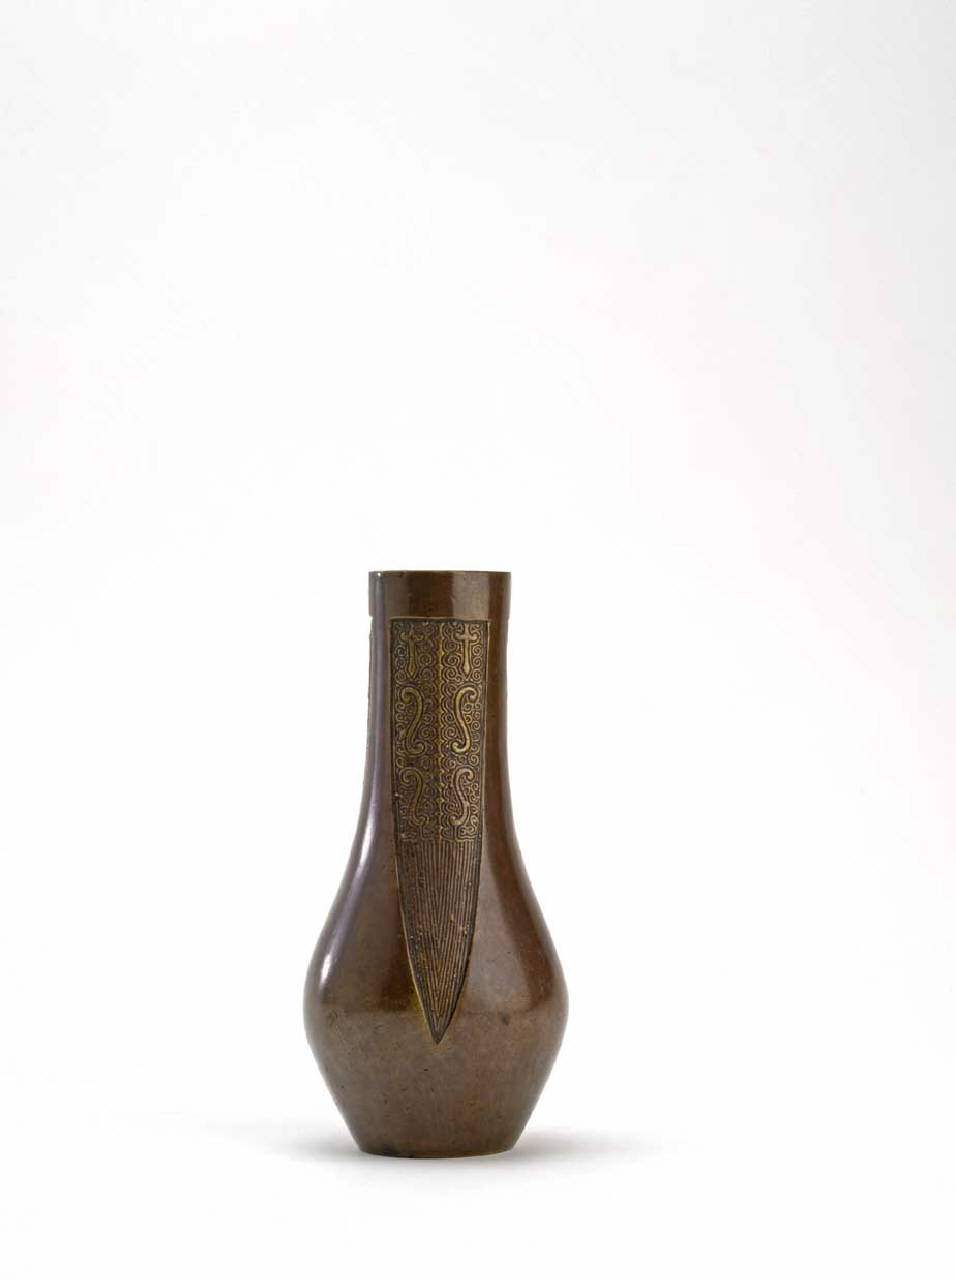 motivi decorativi geometrici (vaso) - manifattura giapponese (secc. XVIII/ XIX)